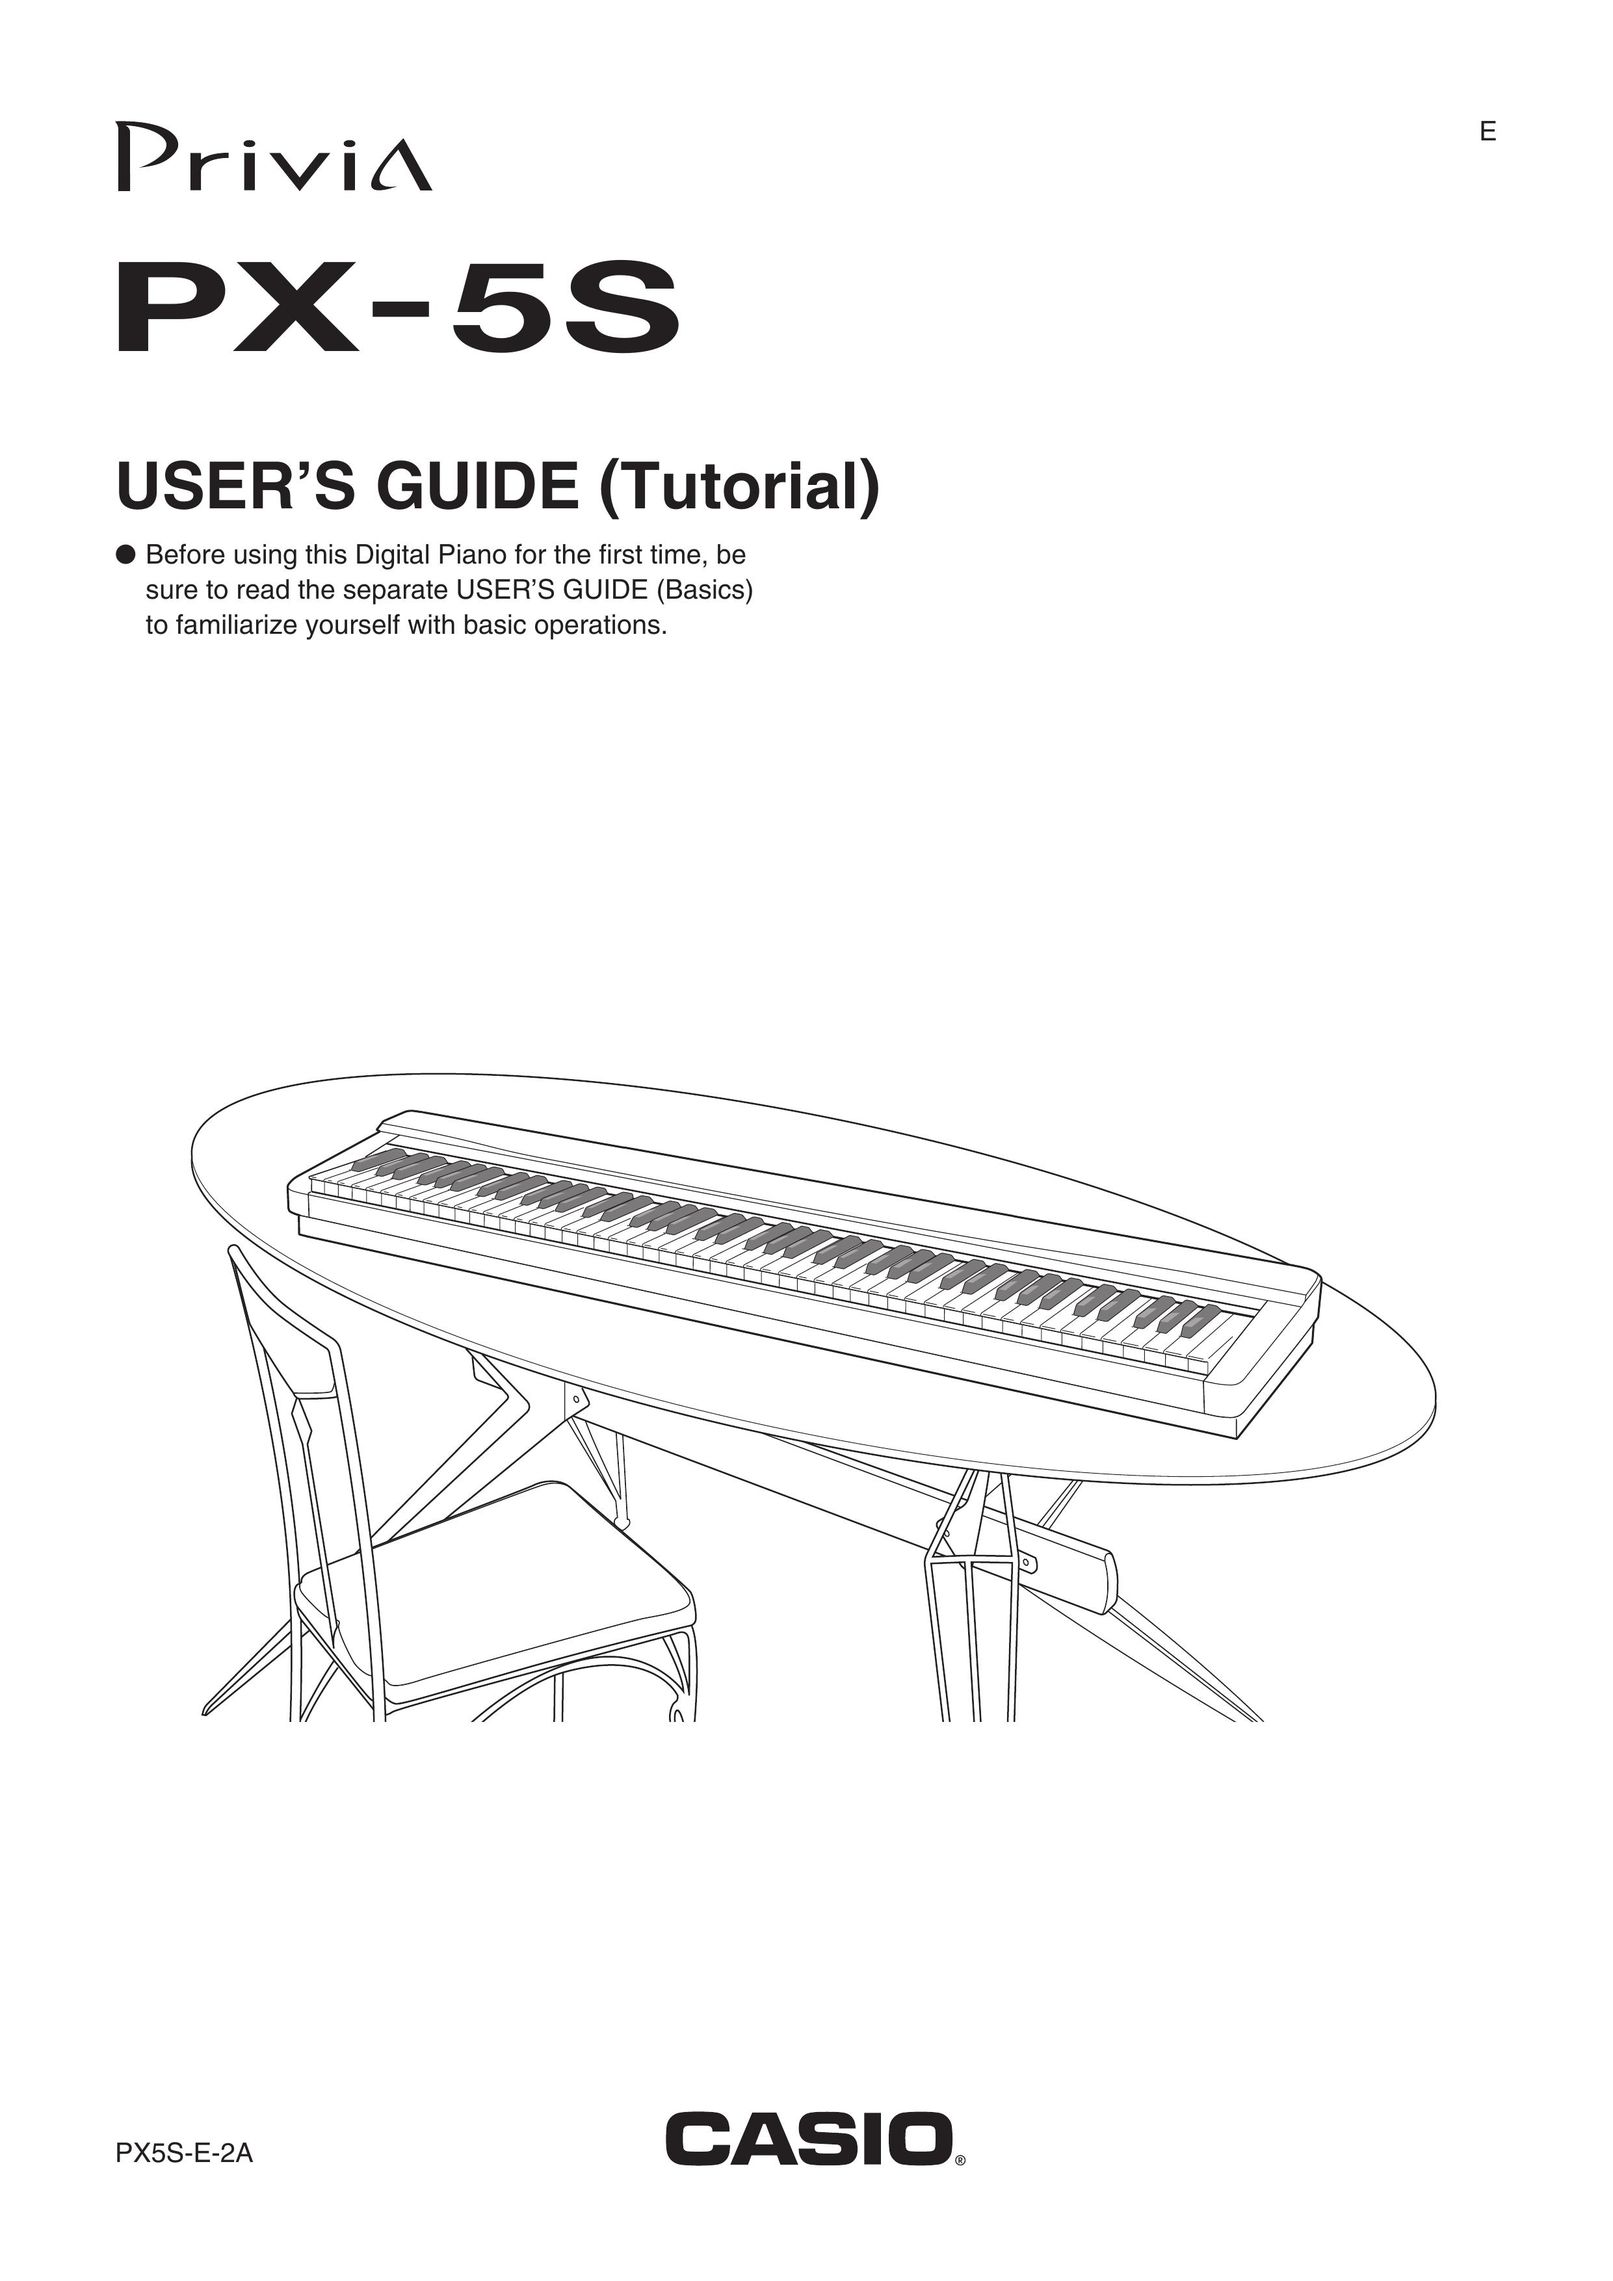 Casio PX-5S Video Game Keyboard User Manual